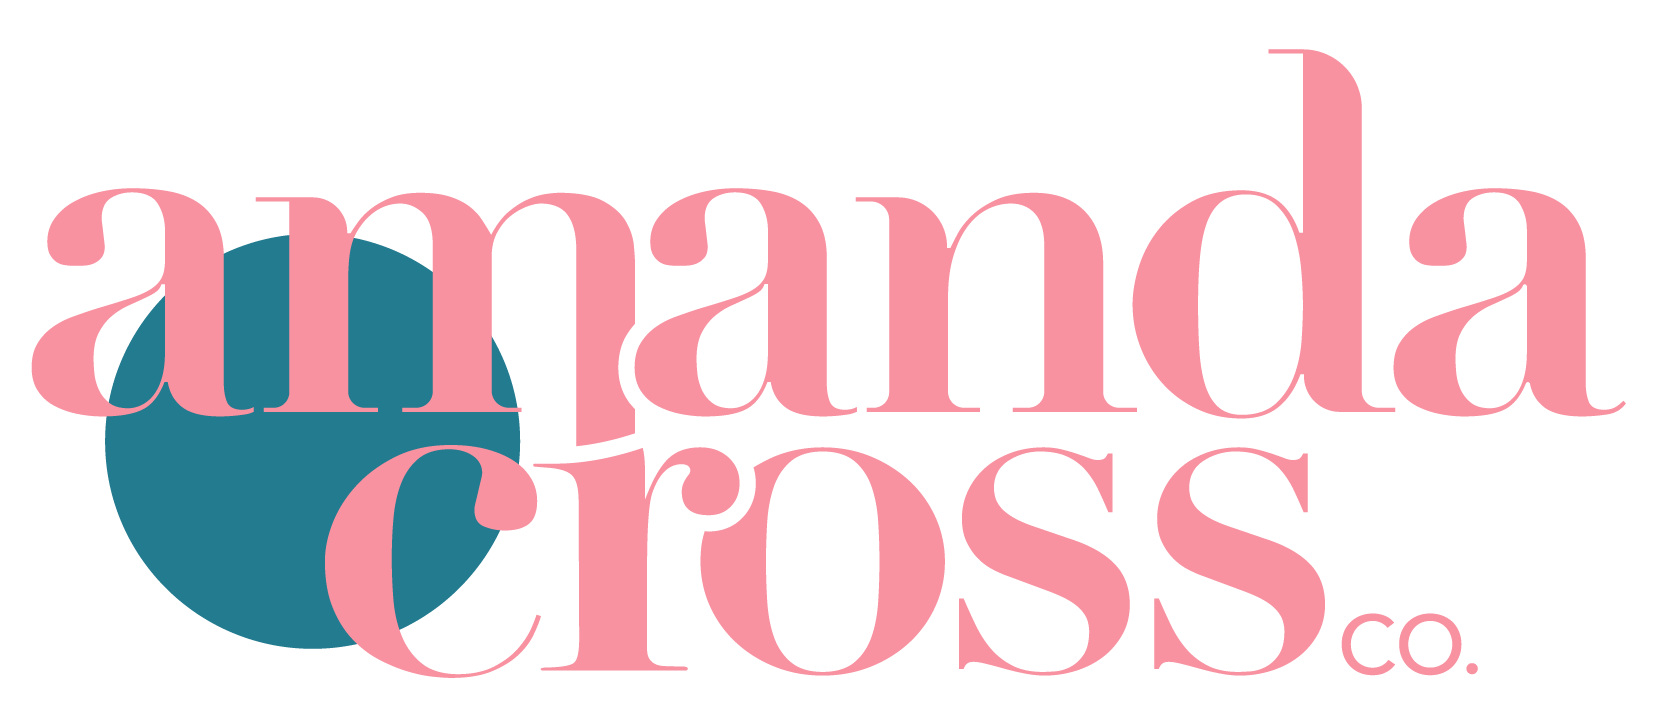 Amanda Cross Co. | Freelance Writer For HR Tech Companies